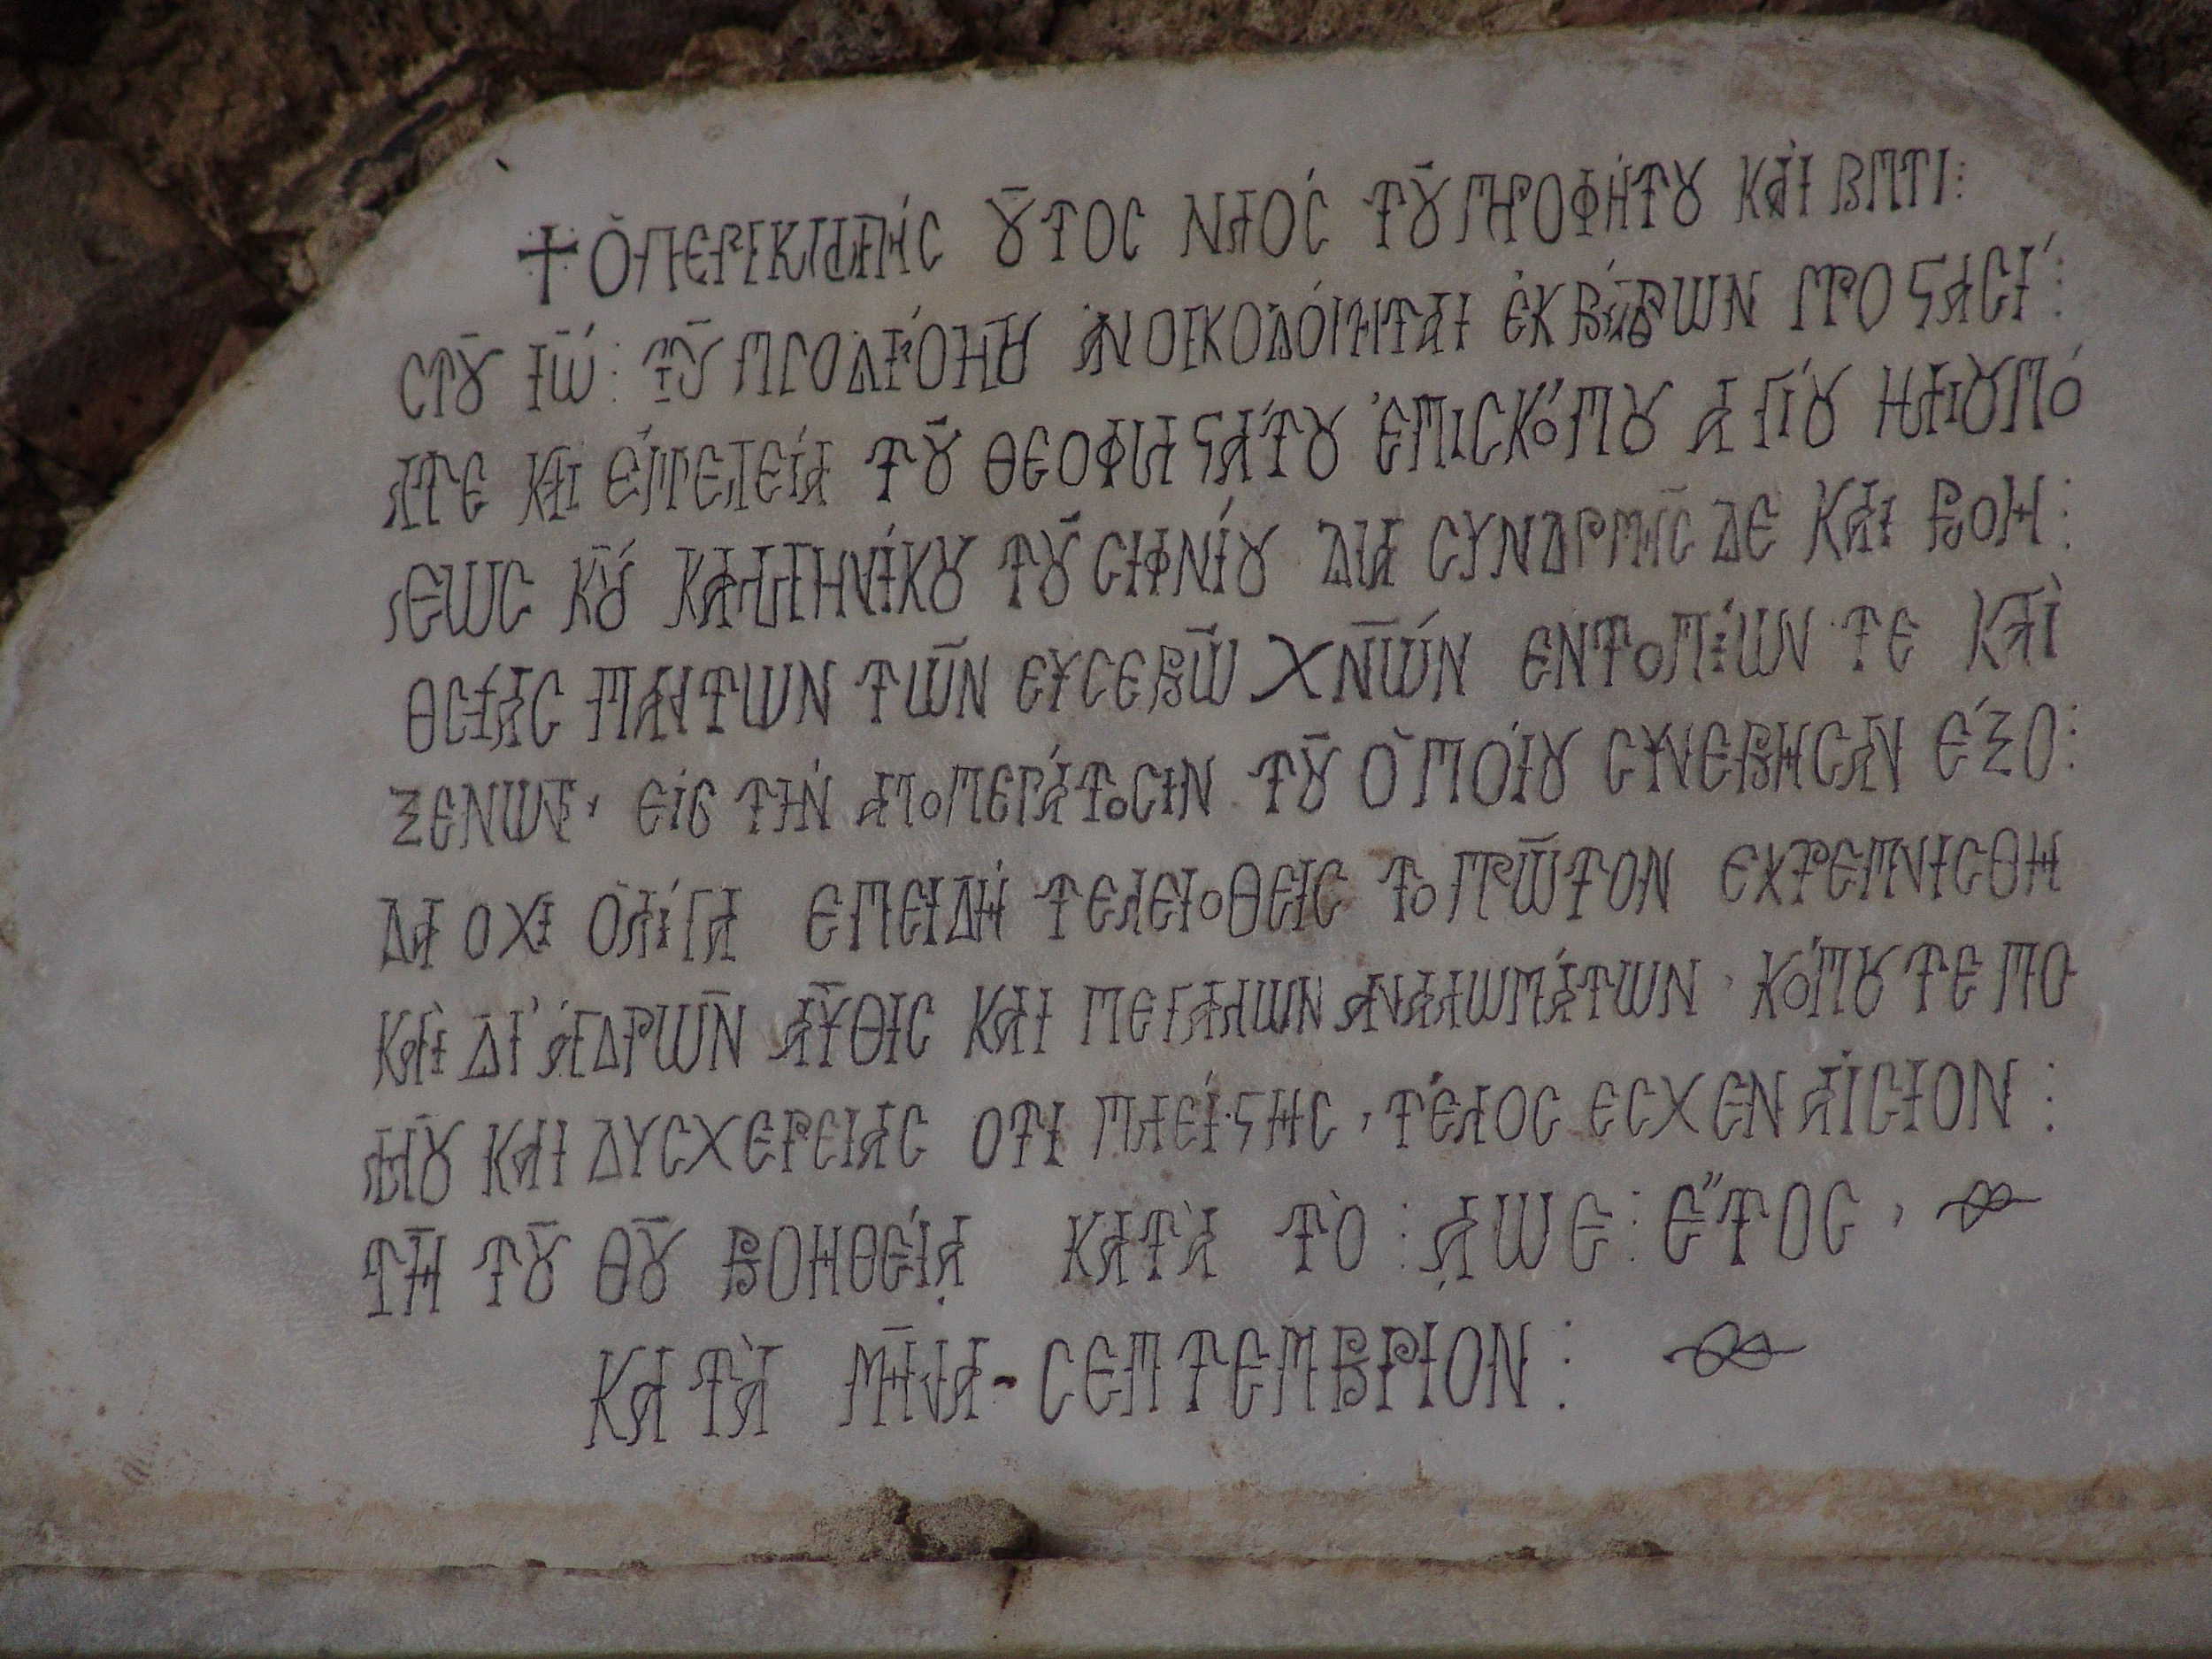 Inscription above the entrance to the Church of St. John the Baptist in Şirince, Turkey